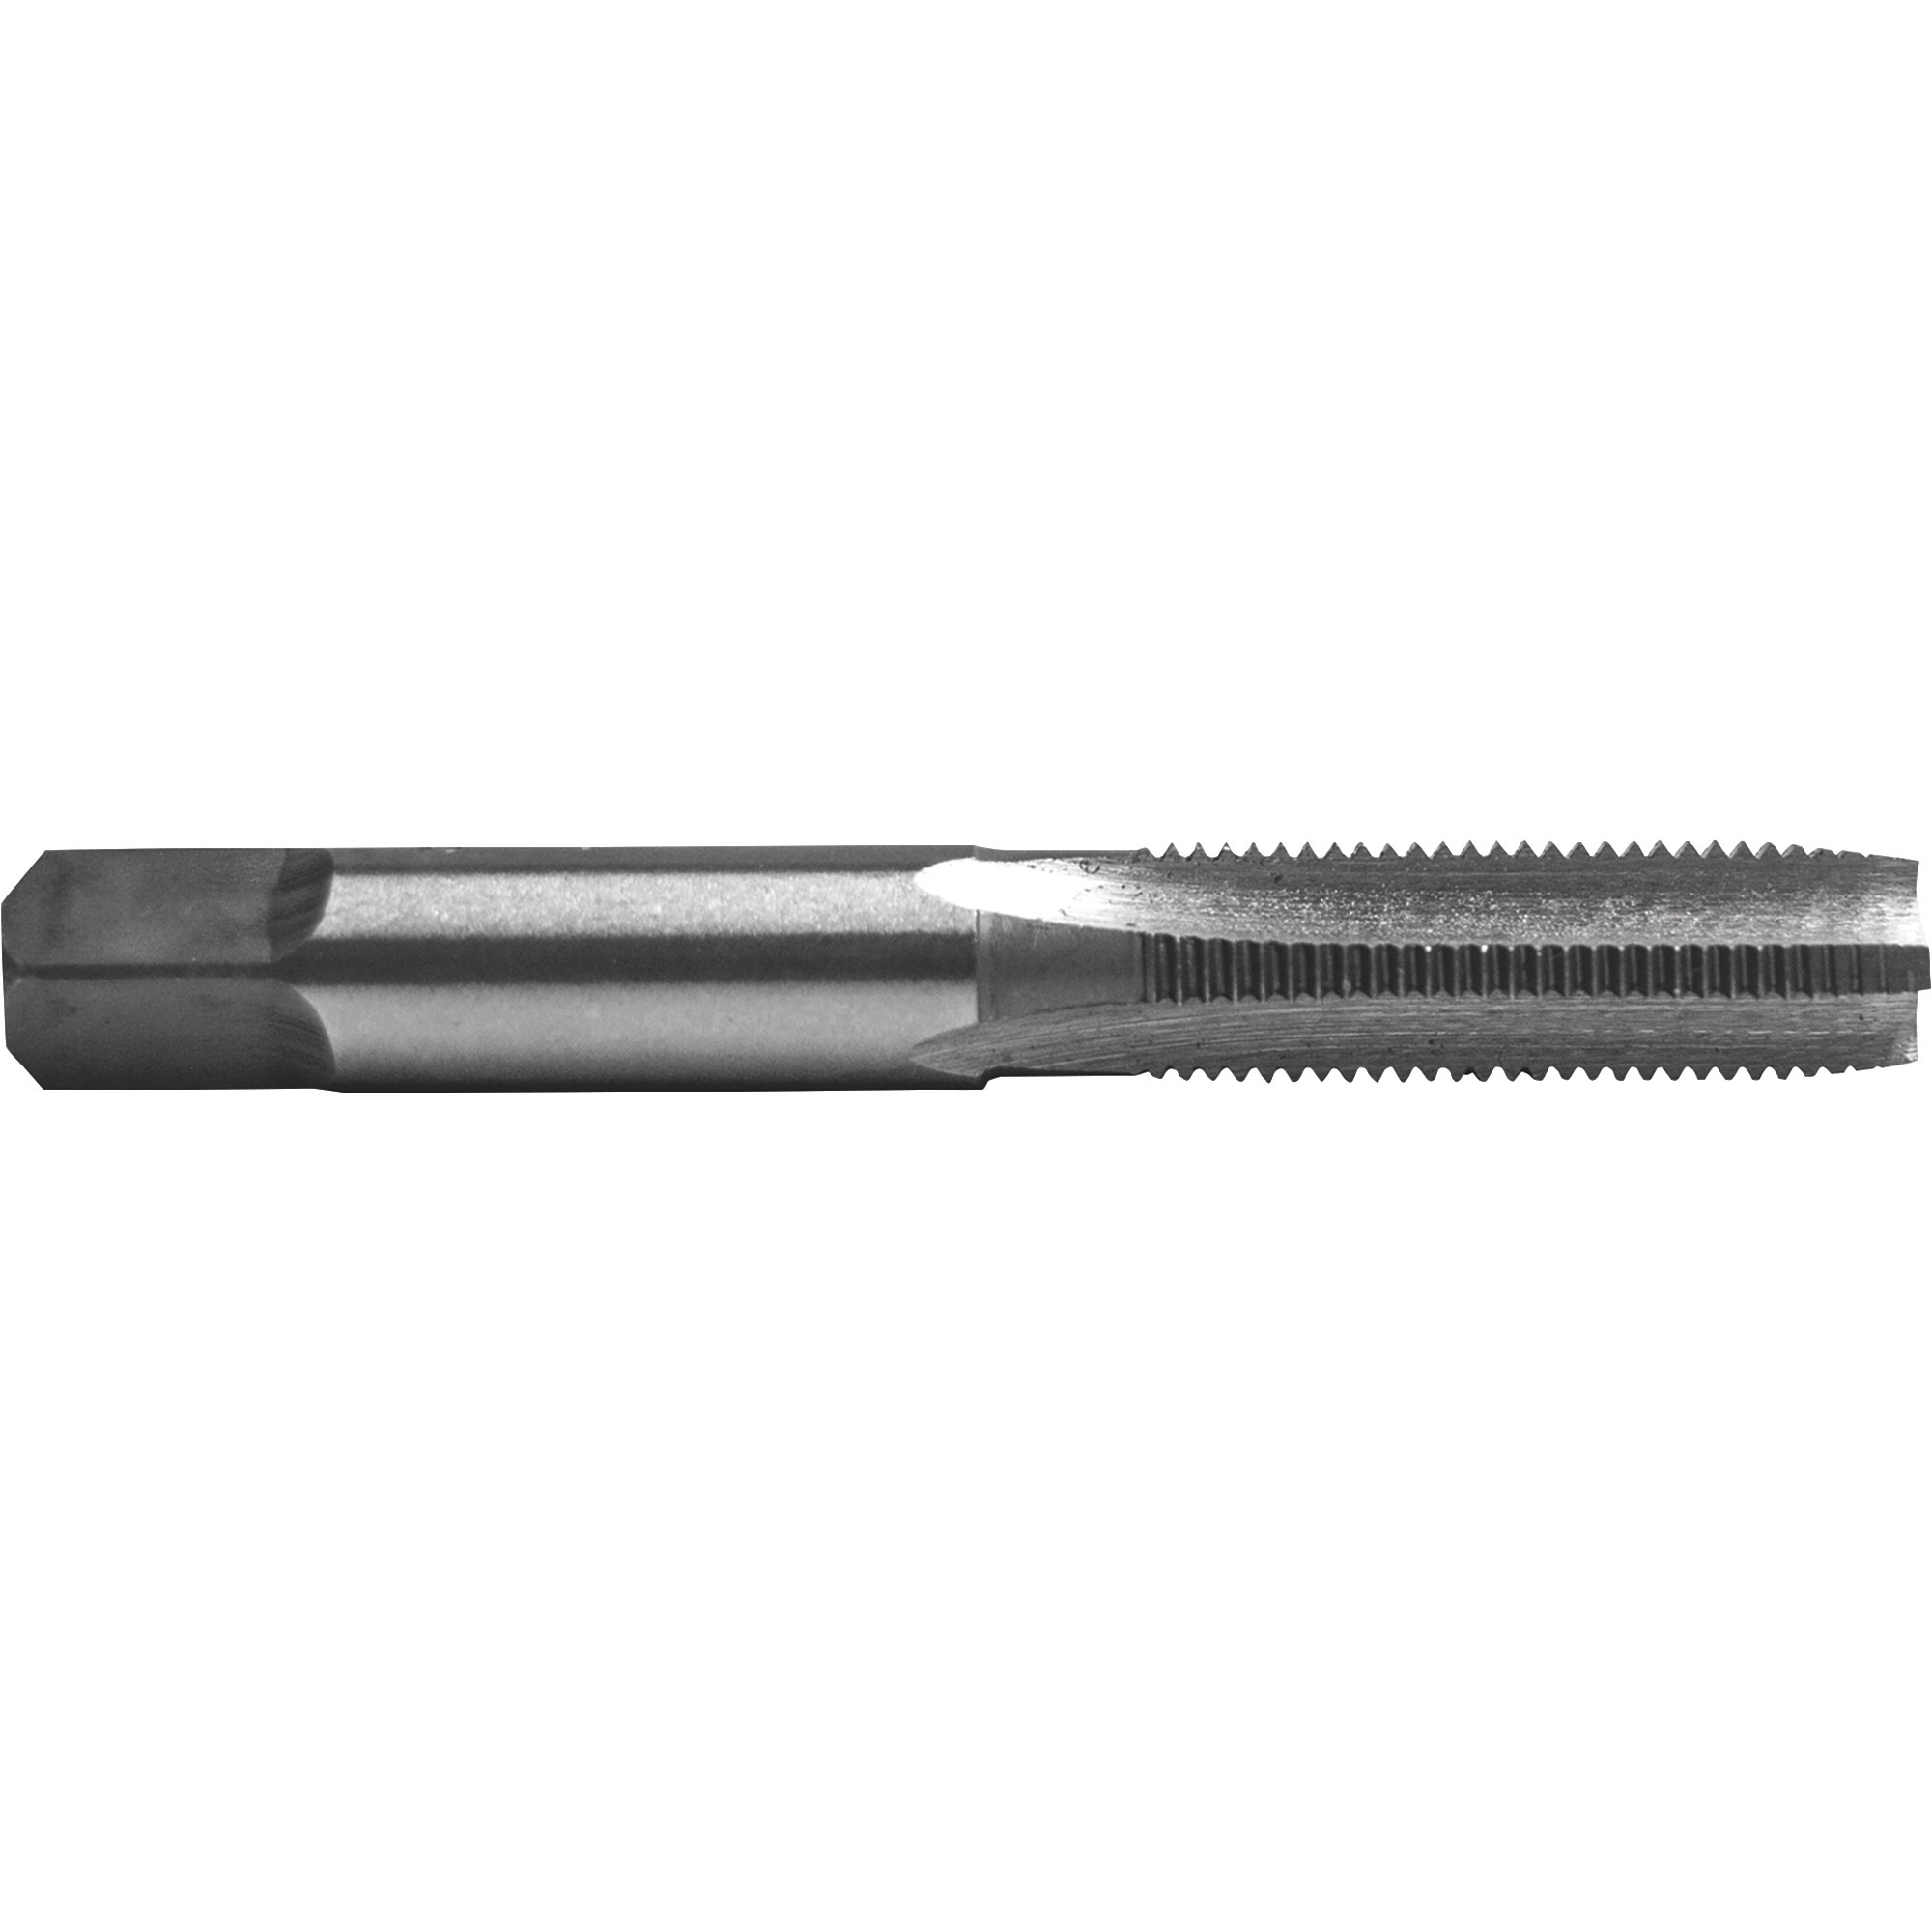 Century Tool Machine Screw Tap, 7/16-14 NC, Model 95109